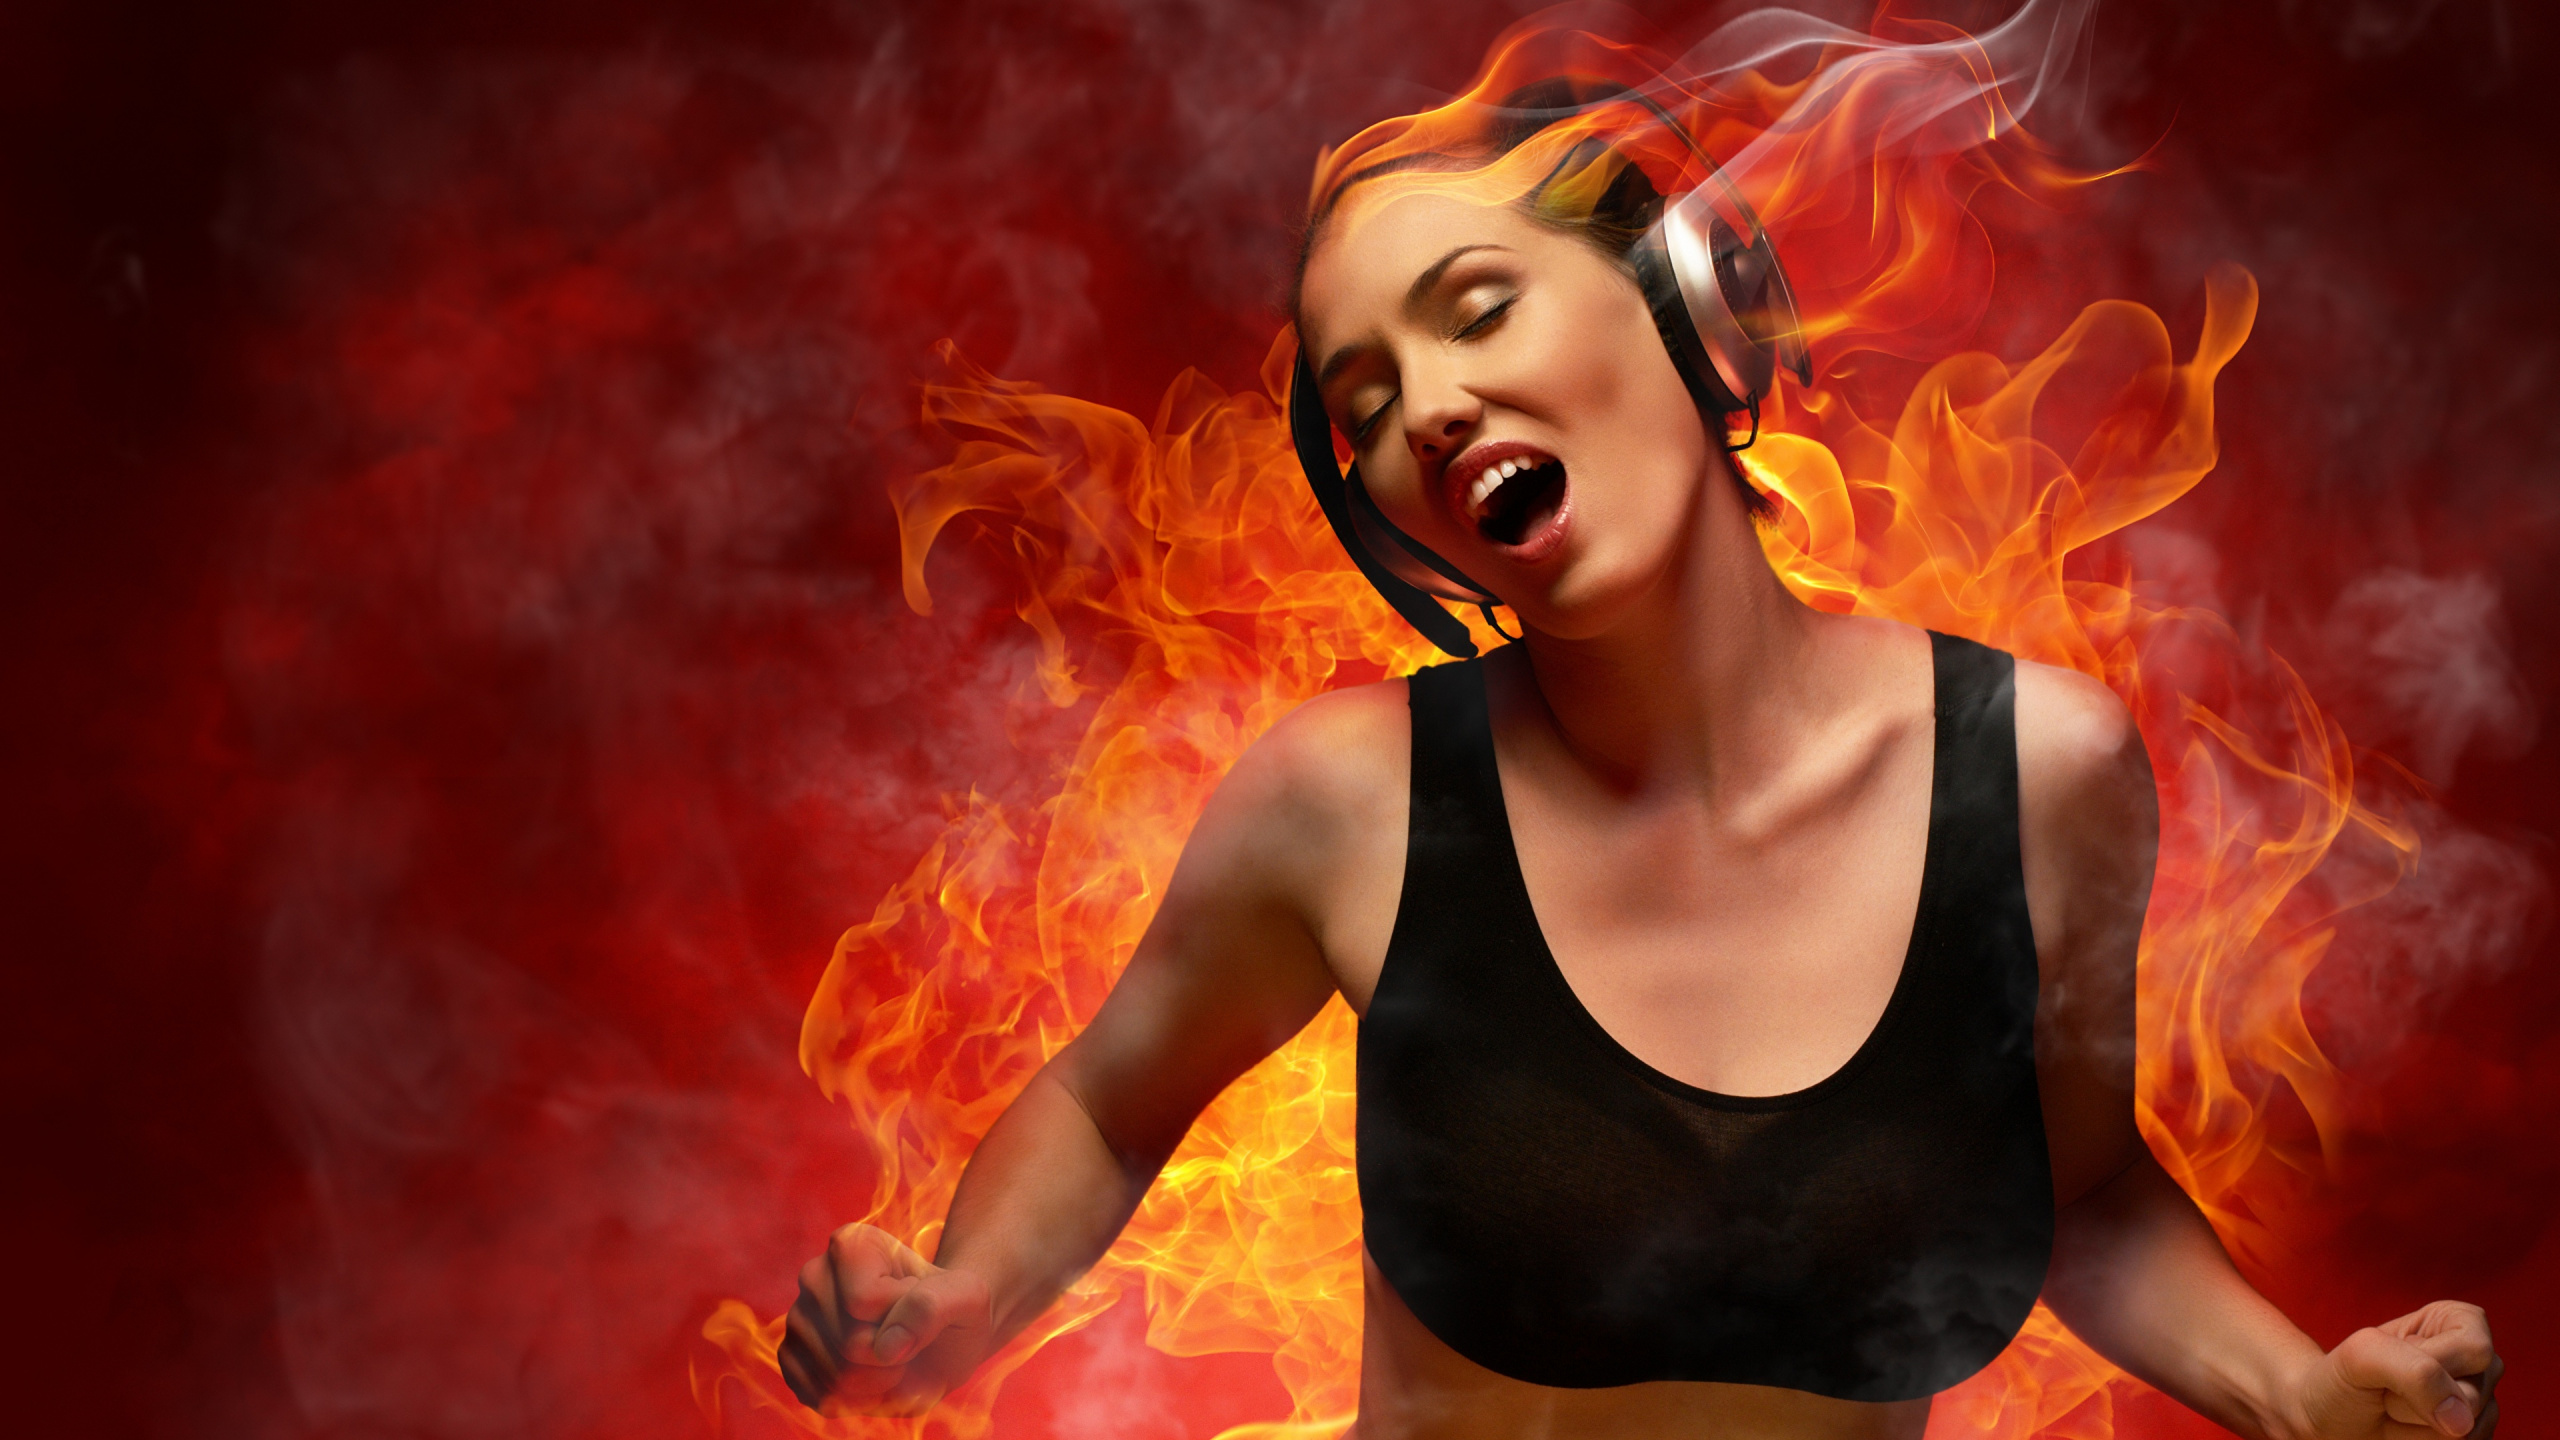 Flame, Muscle, Fire, Flesh, DJ Mixer. Wallpaper in 2560x1440 Resolution